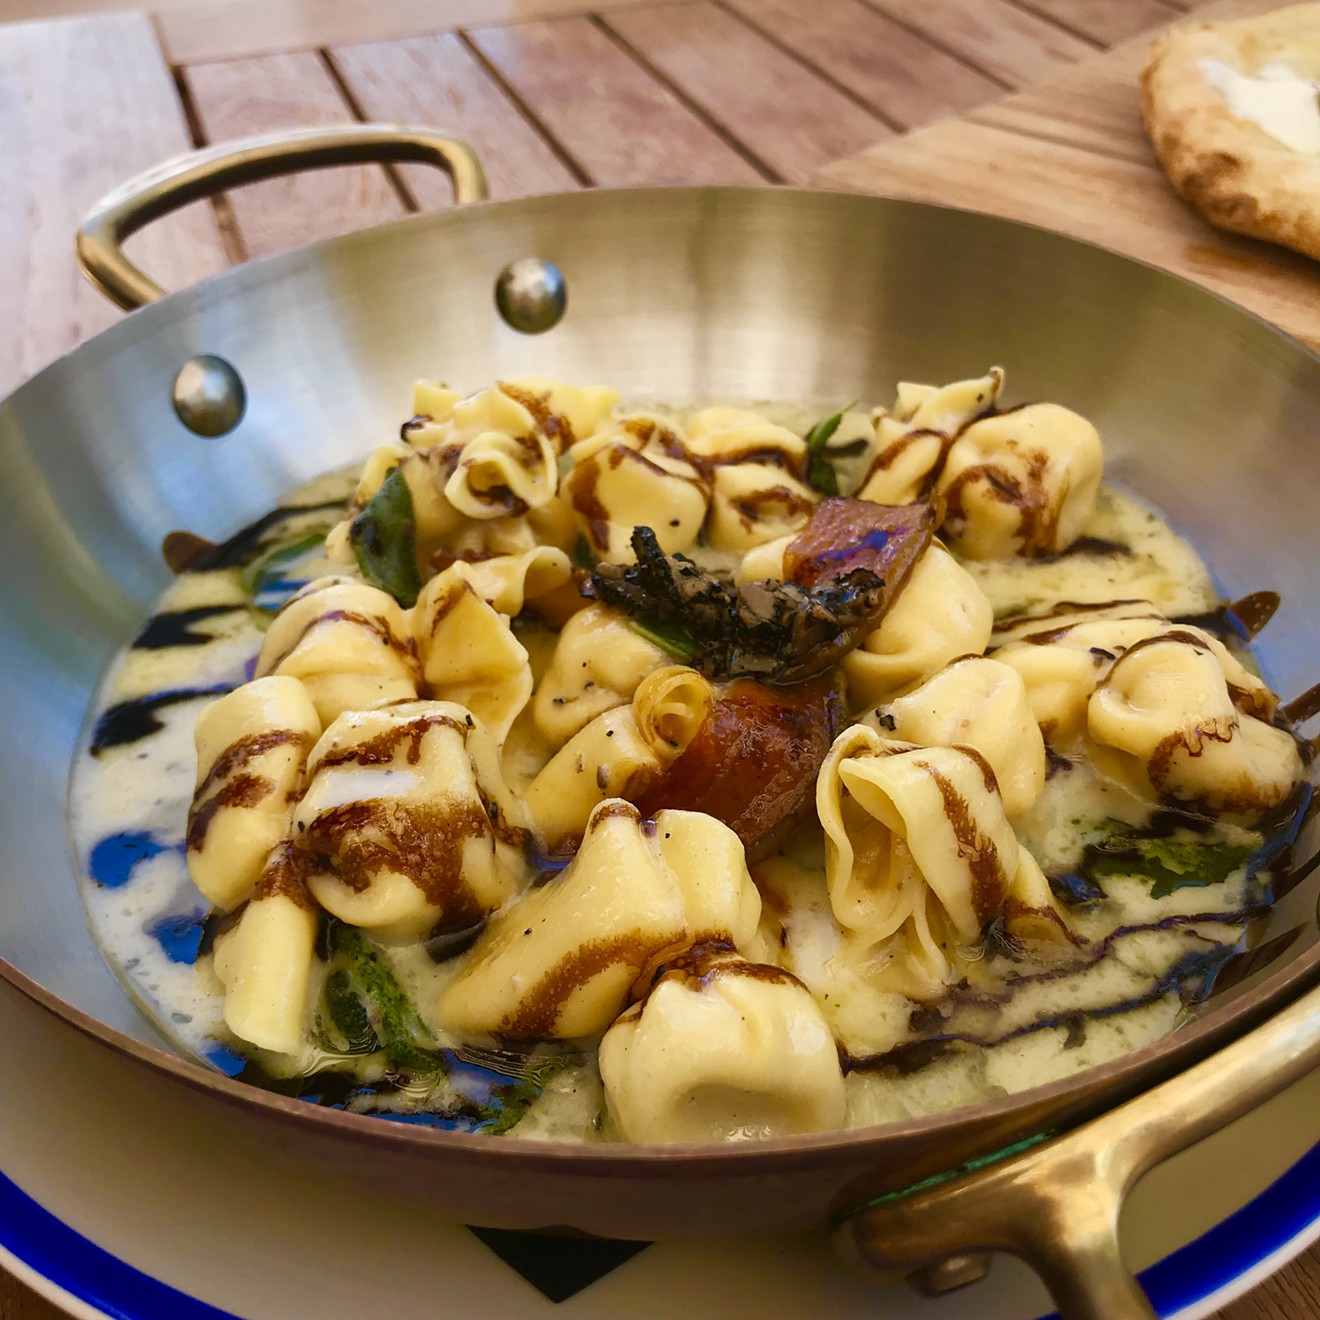 Fiocchetti alle pere e tarfuto: Handmade pasta filled with truffle cream and caramelized pear.